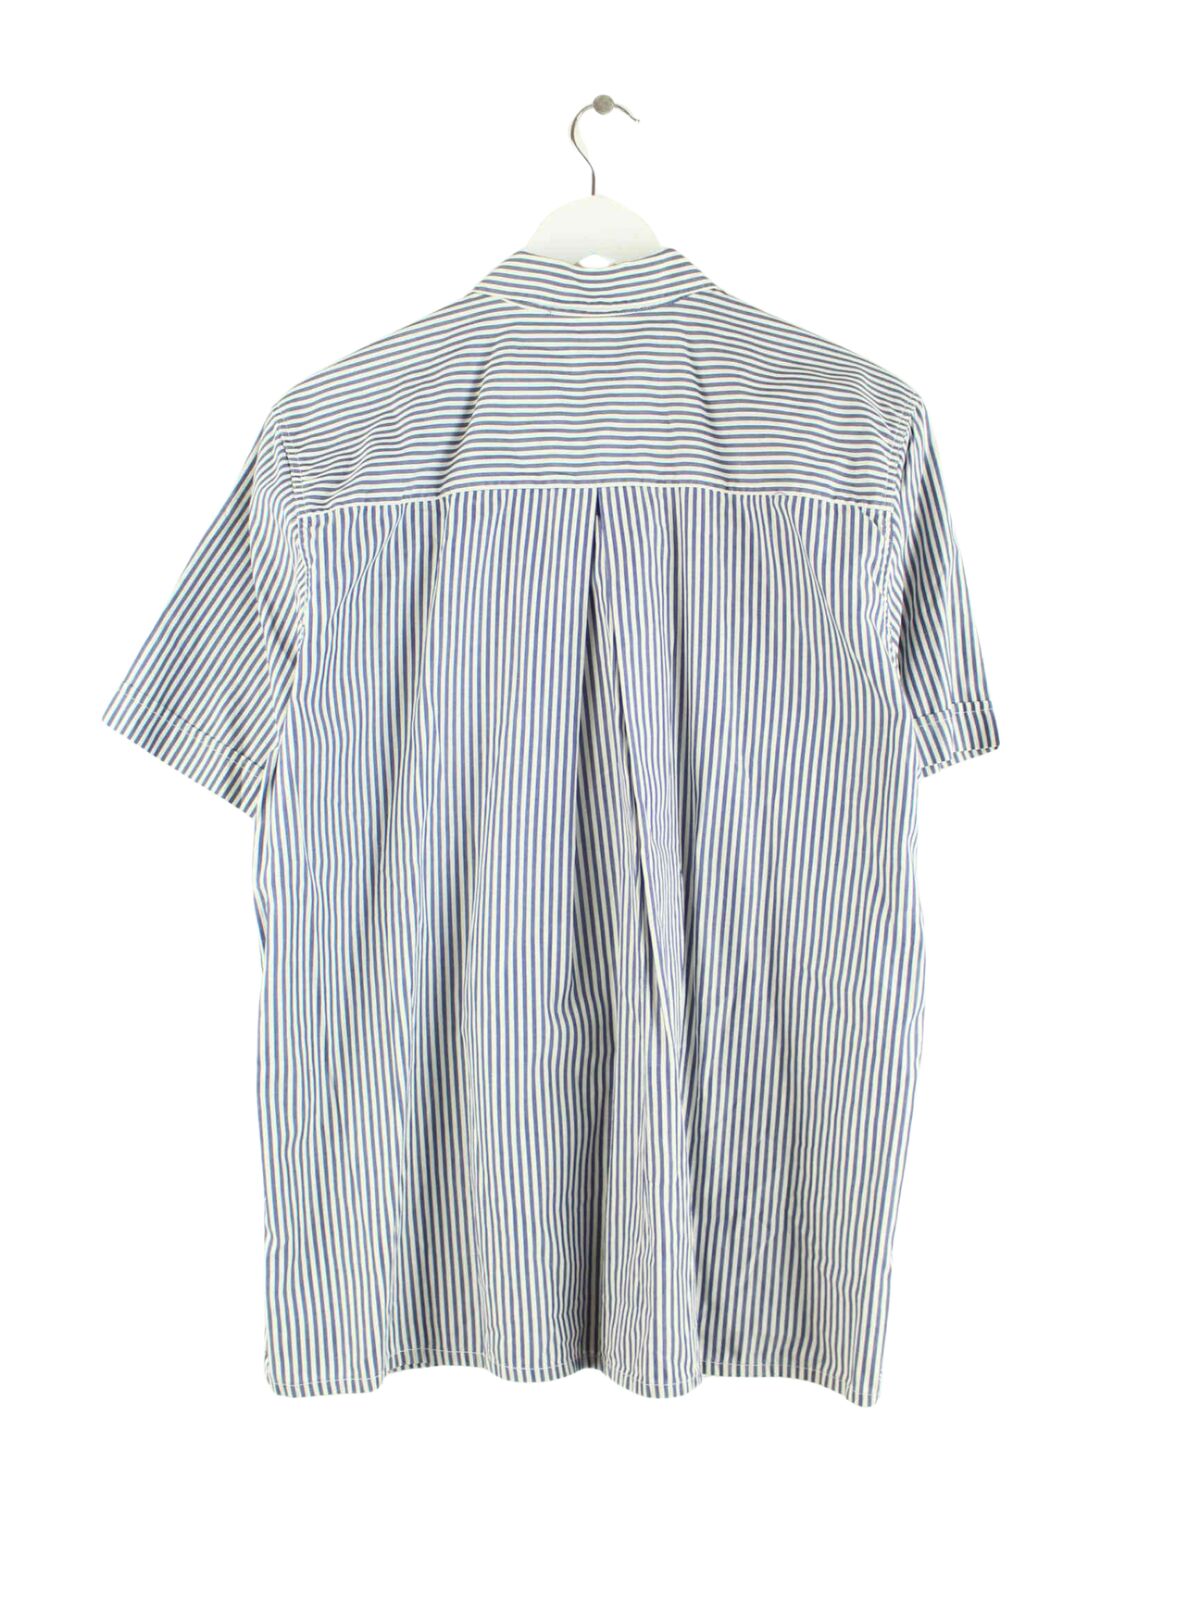 Vintage Damen 90s Striped Kurzarm Hemd Blau L (back image)